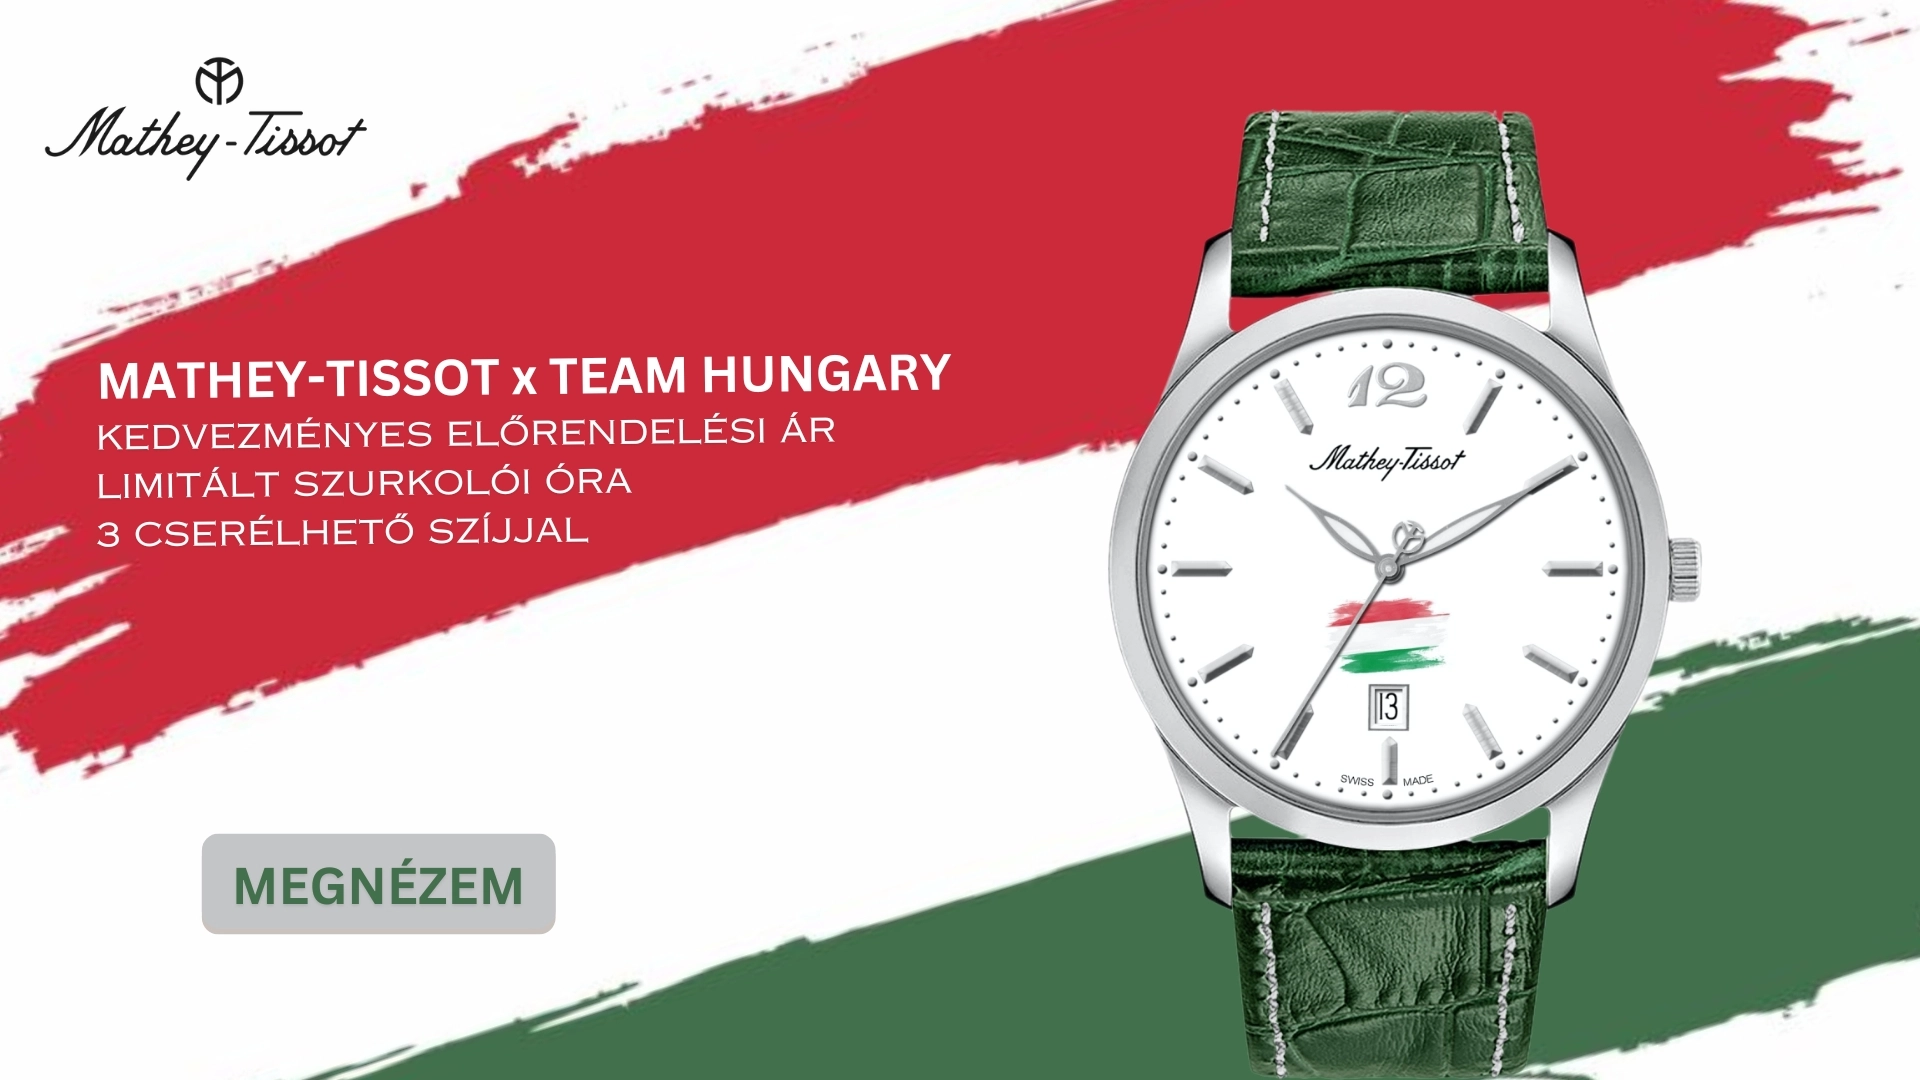 MT x TEAM HUNGARY